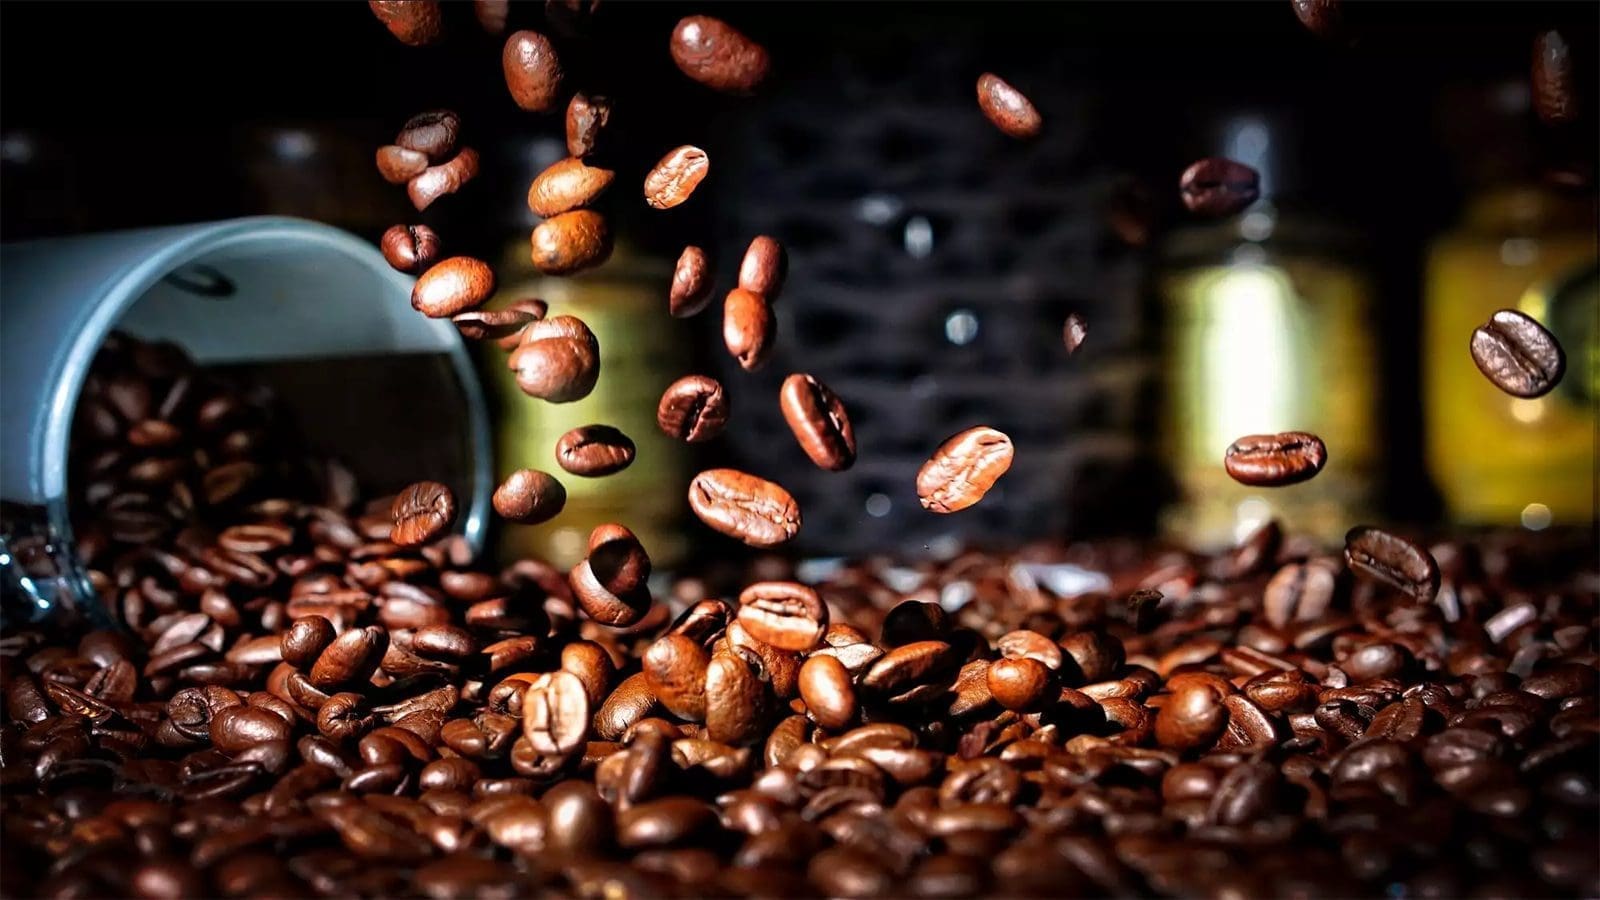 Uganda Coffee Development Authority earns prestigious Q Venue recognition from Coffee Quality Institute